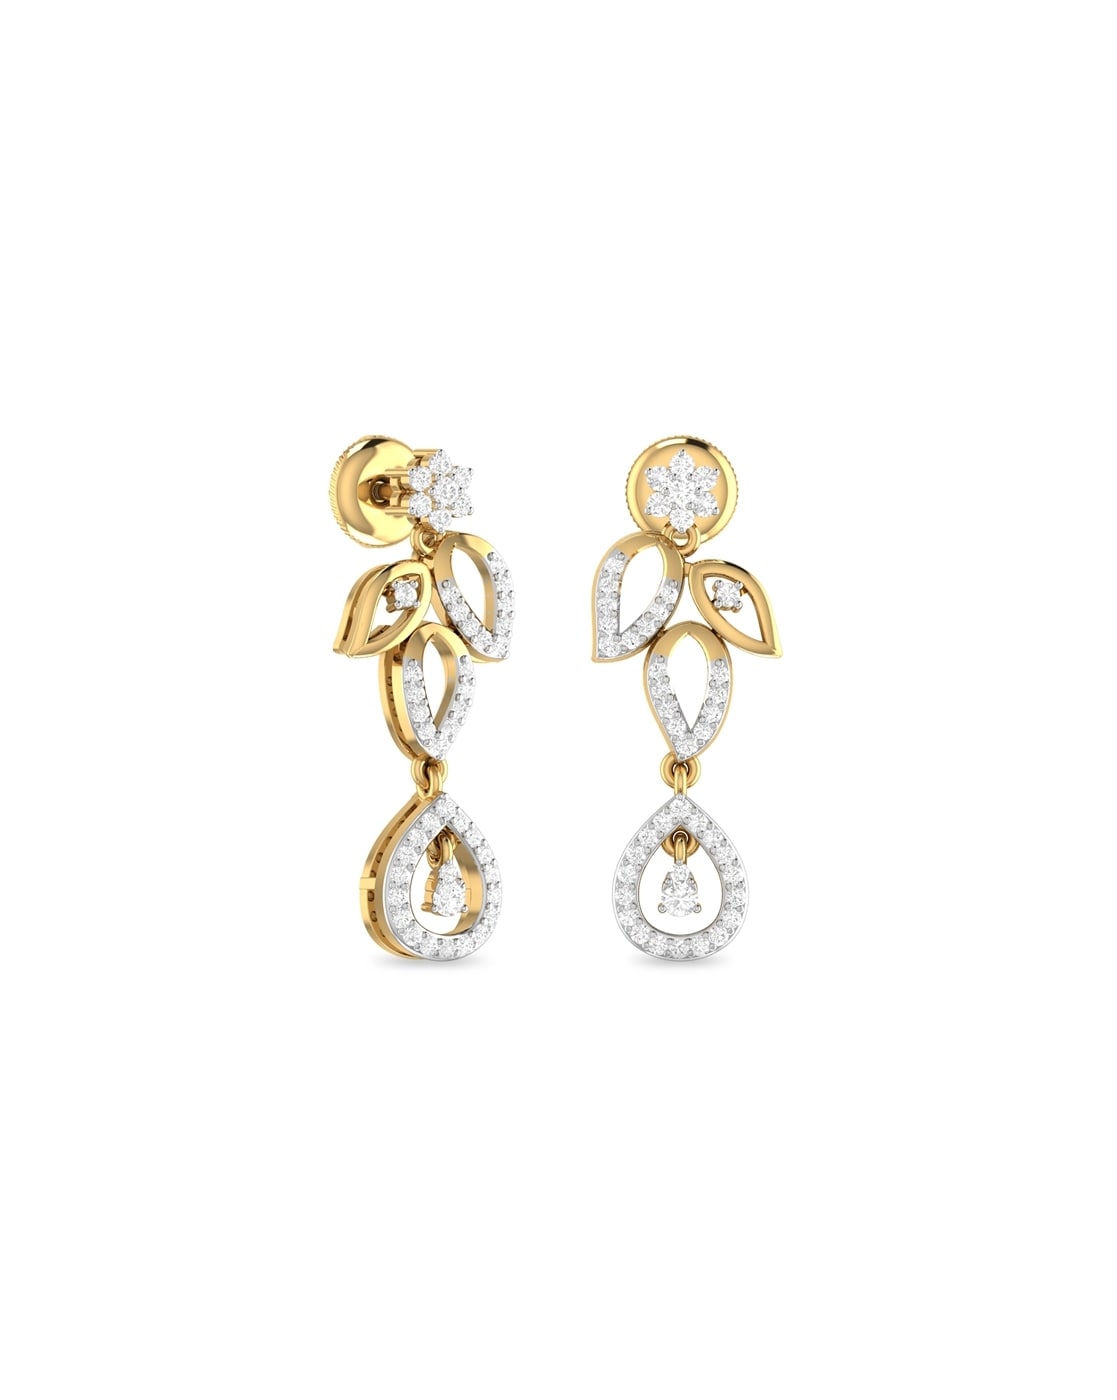 Buy Mens Stud Diamond Earrings CZ 18K Gold Diamond Earrings 925 Online in  India  Etsy